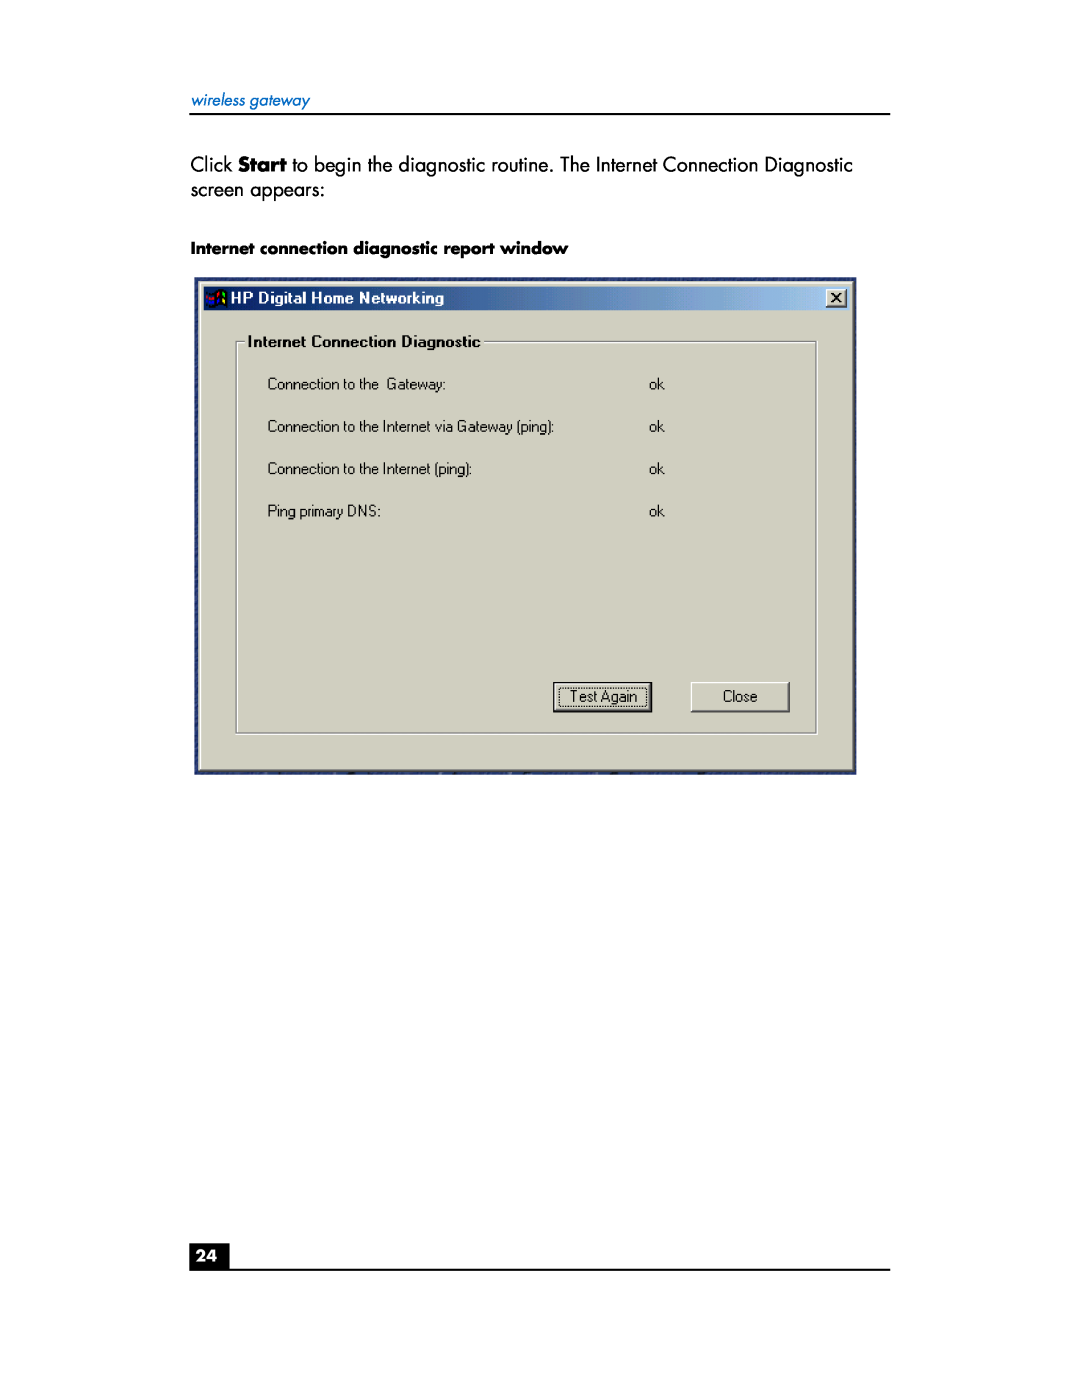 HP hn200w manual wireless gateway, Internet connection diagnostic report window 